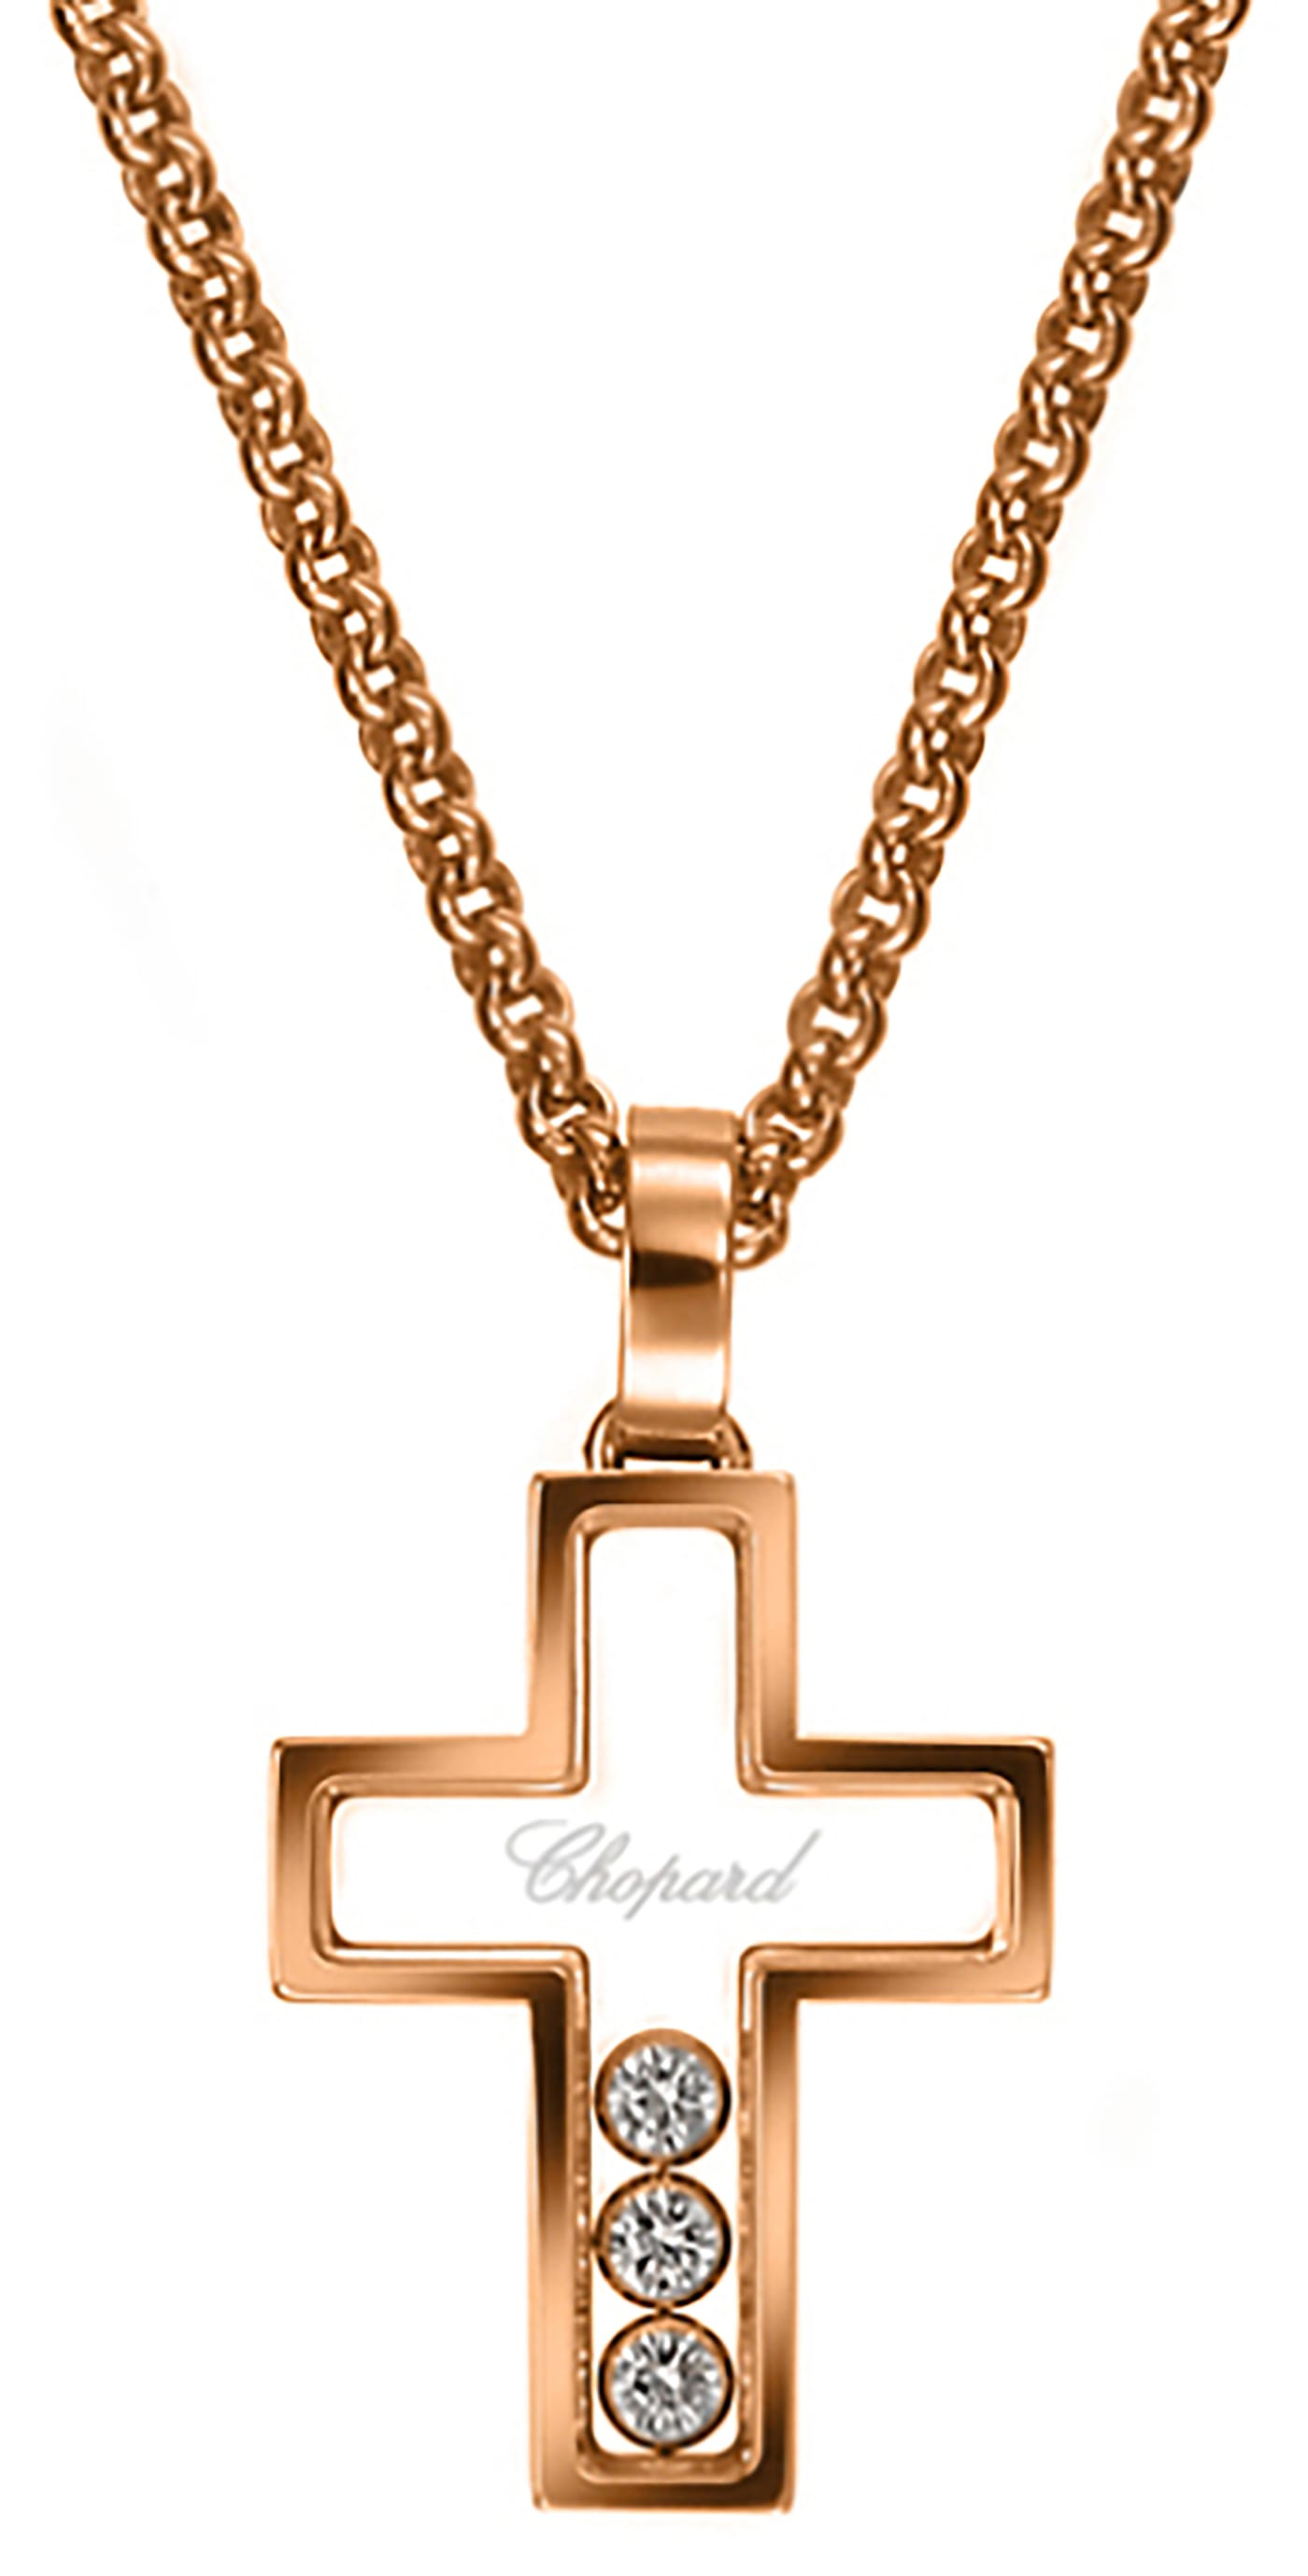 Happy Diamonds pendant by Chopard